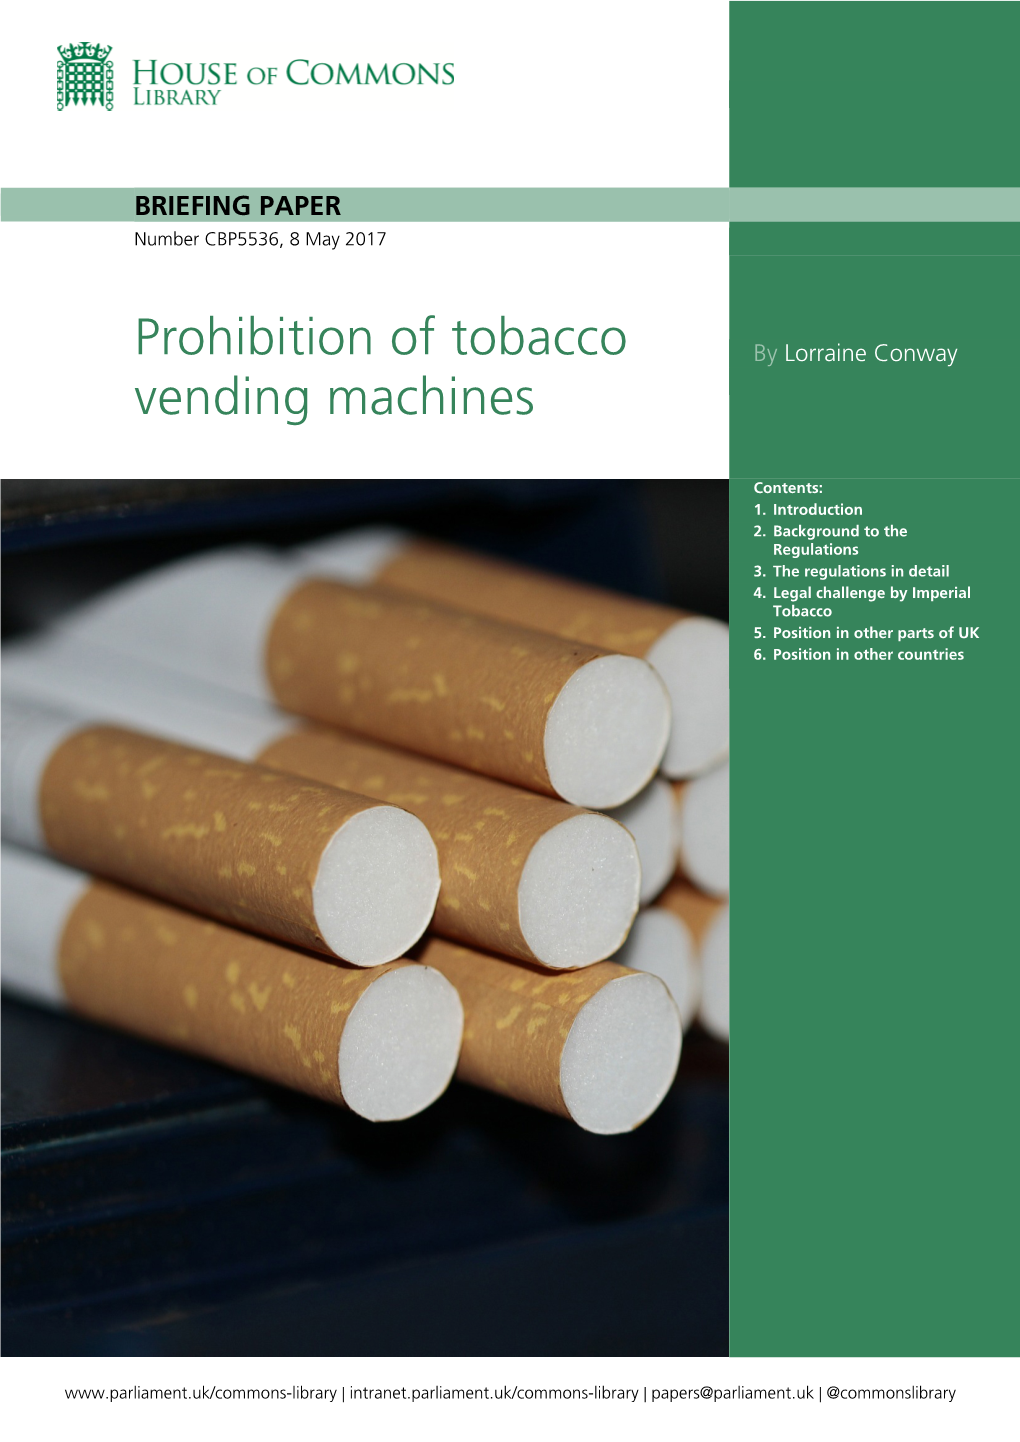 Prohibition of Tobacco Vending Machines